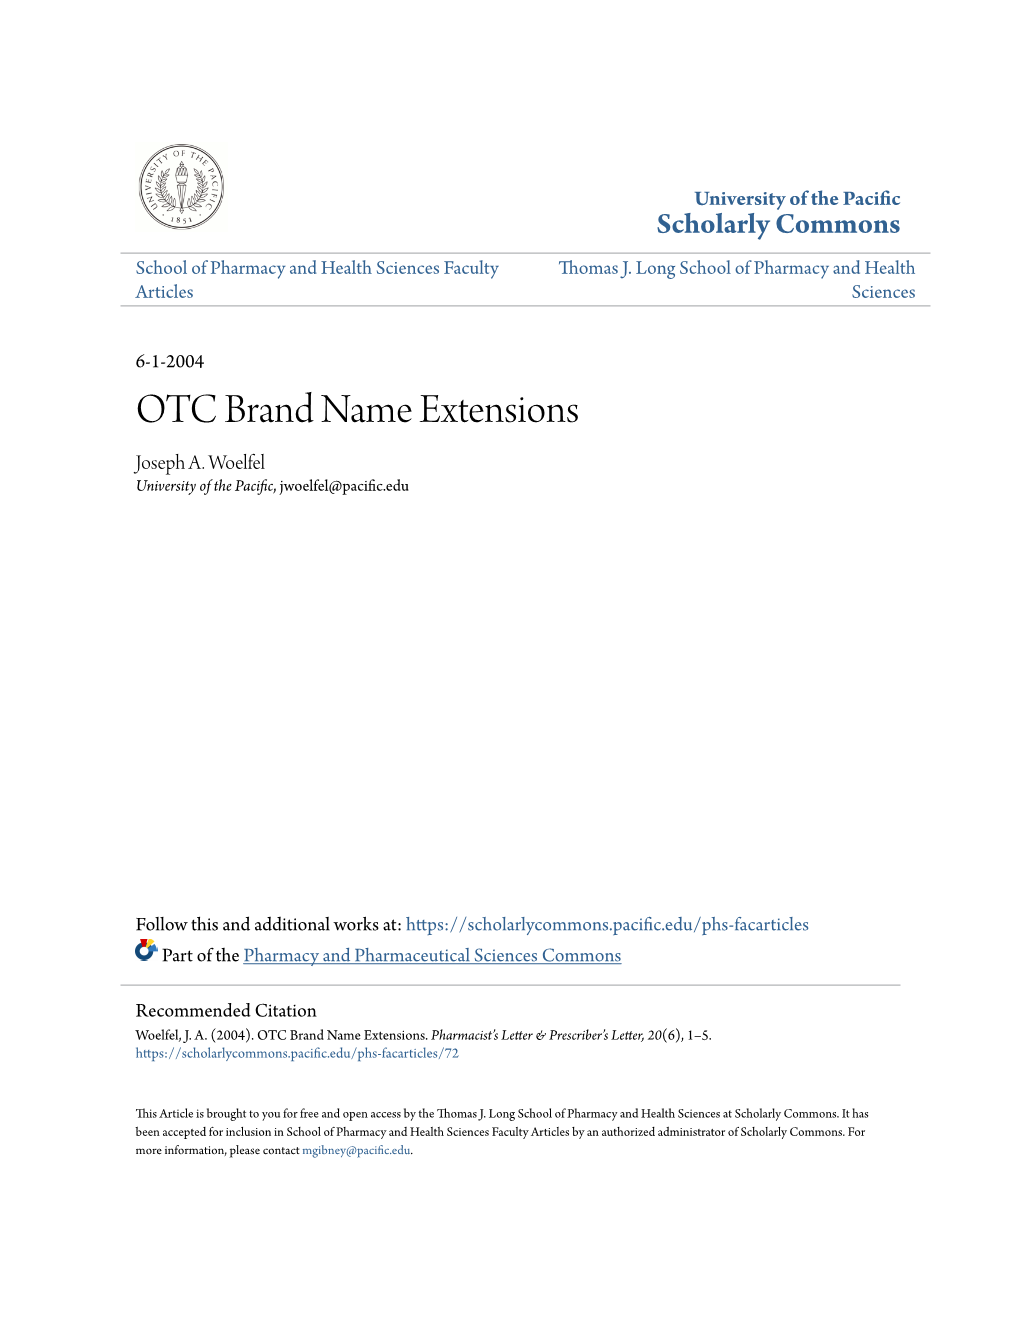 OTC Brand Name Extensions Joseph A